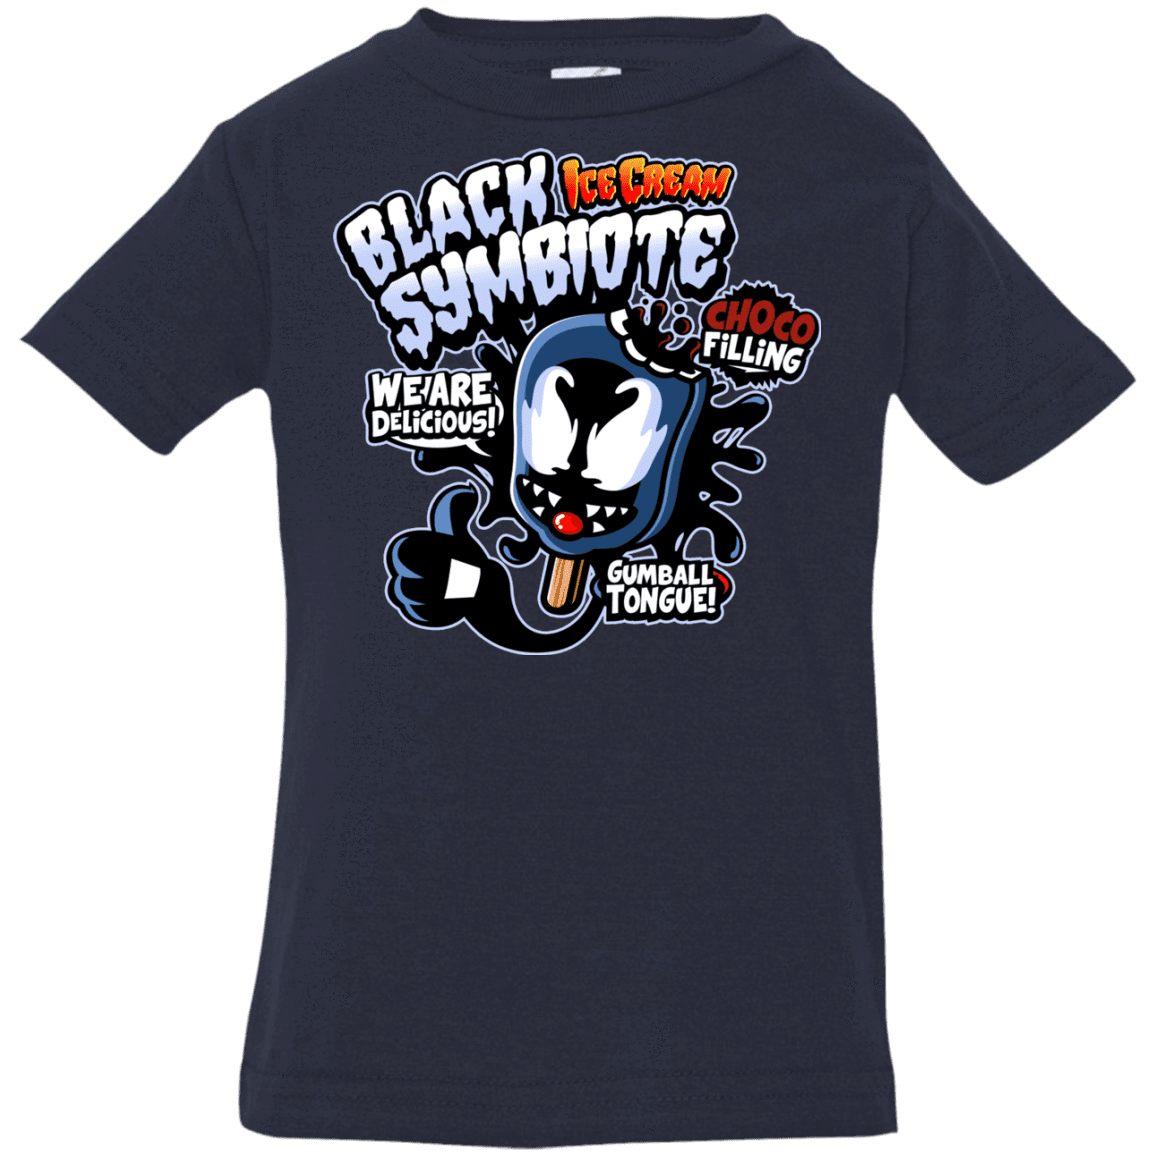 T-Shirts Navy / 6 Months Black Symbiote Ice Cream Infant Premium T-Shirt